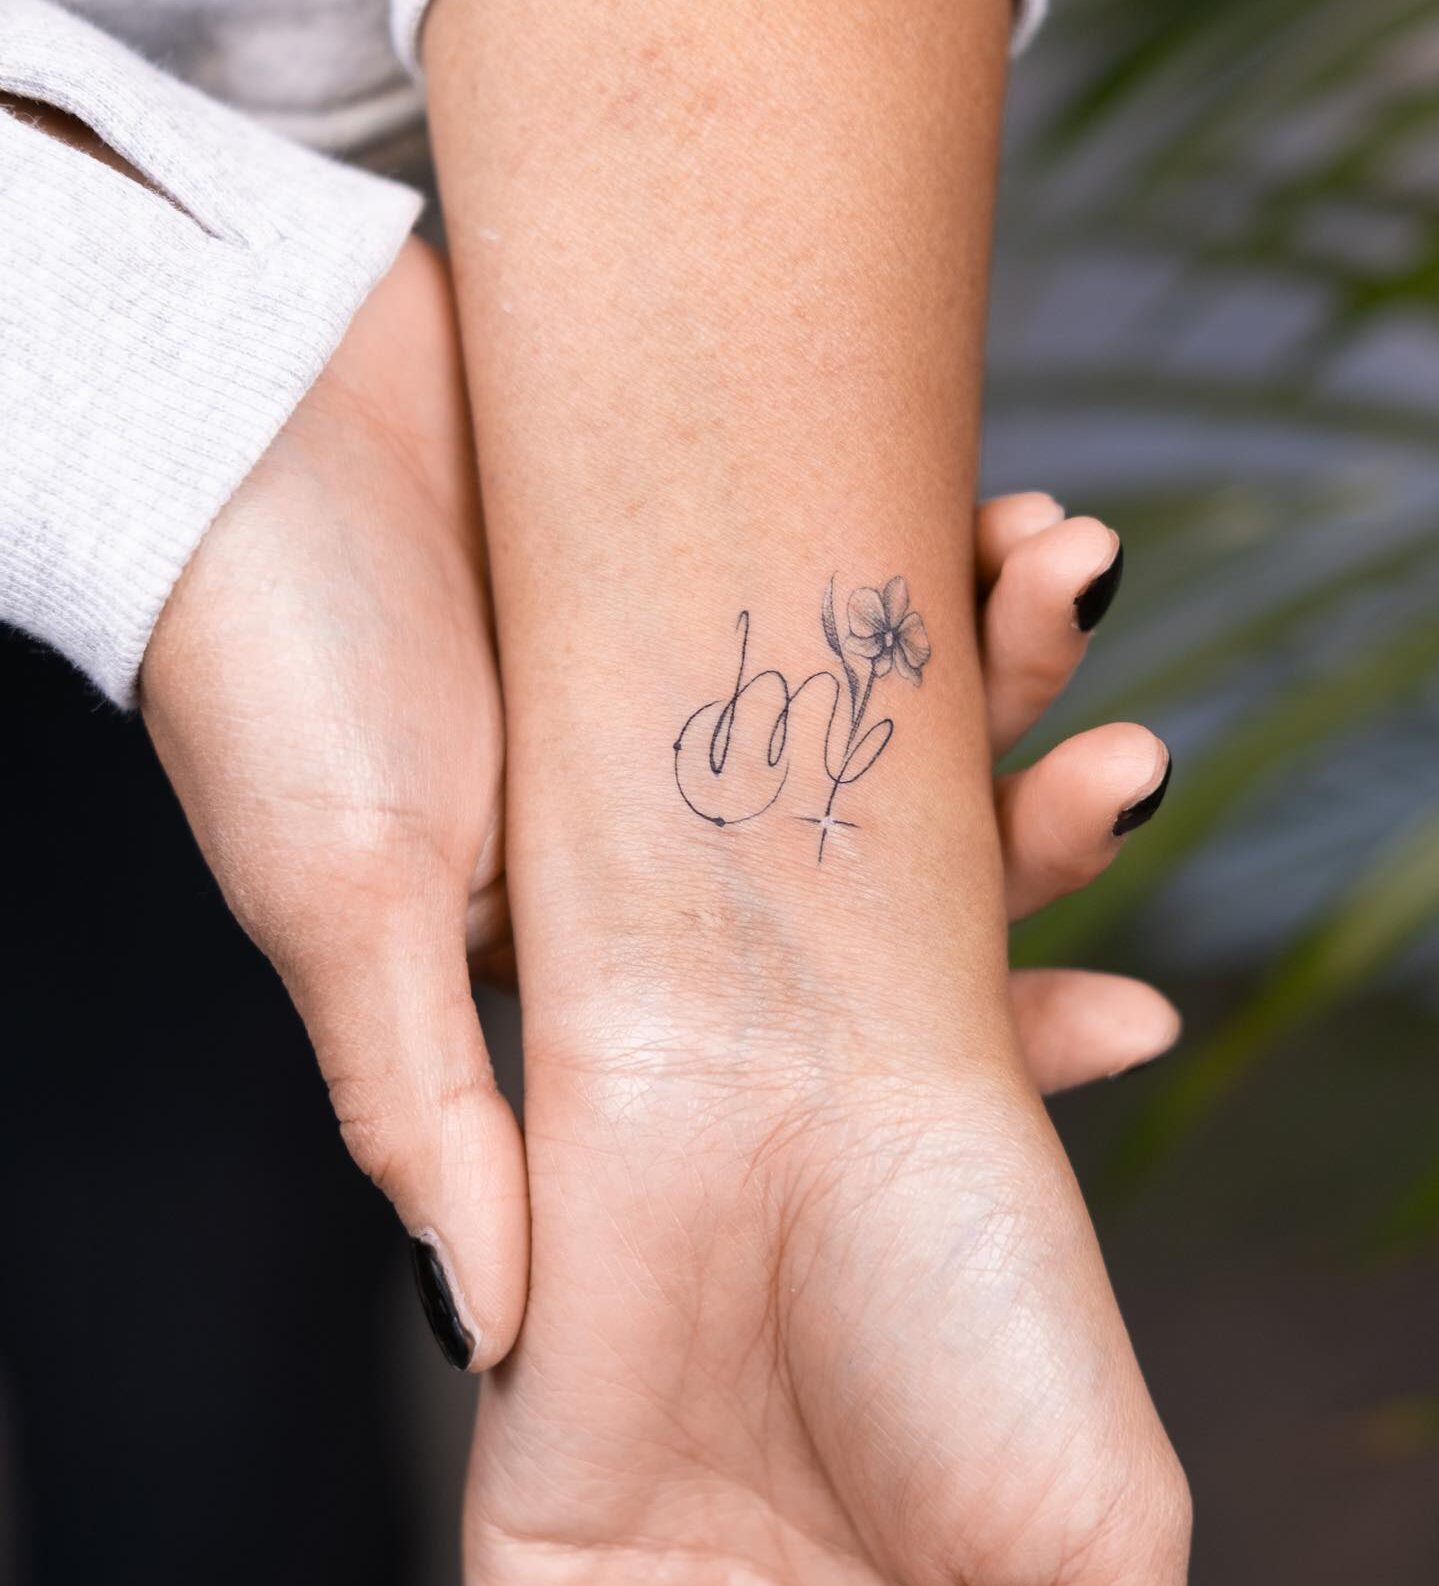 Virgo zodiac symbol and flower tattoo on the wrist